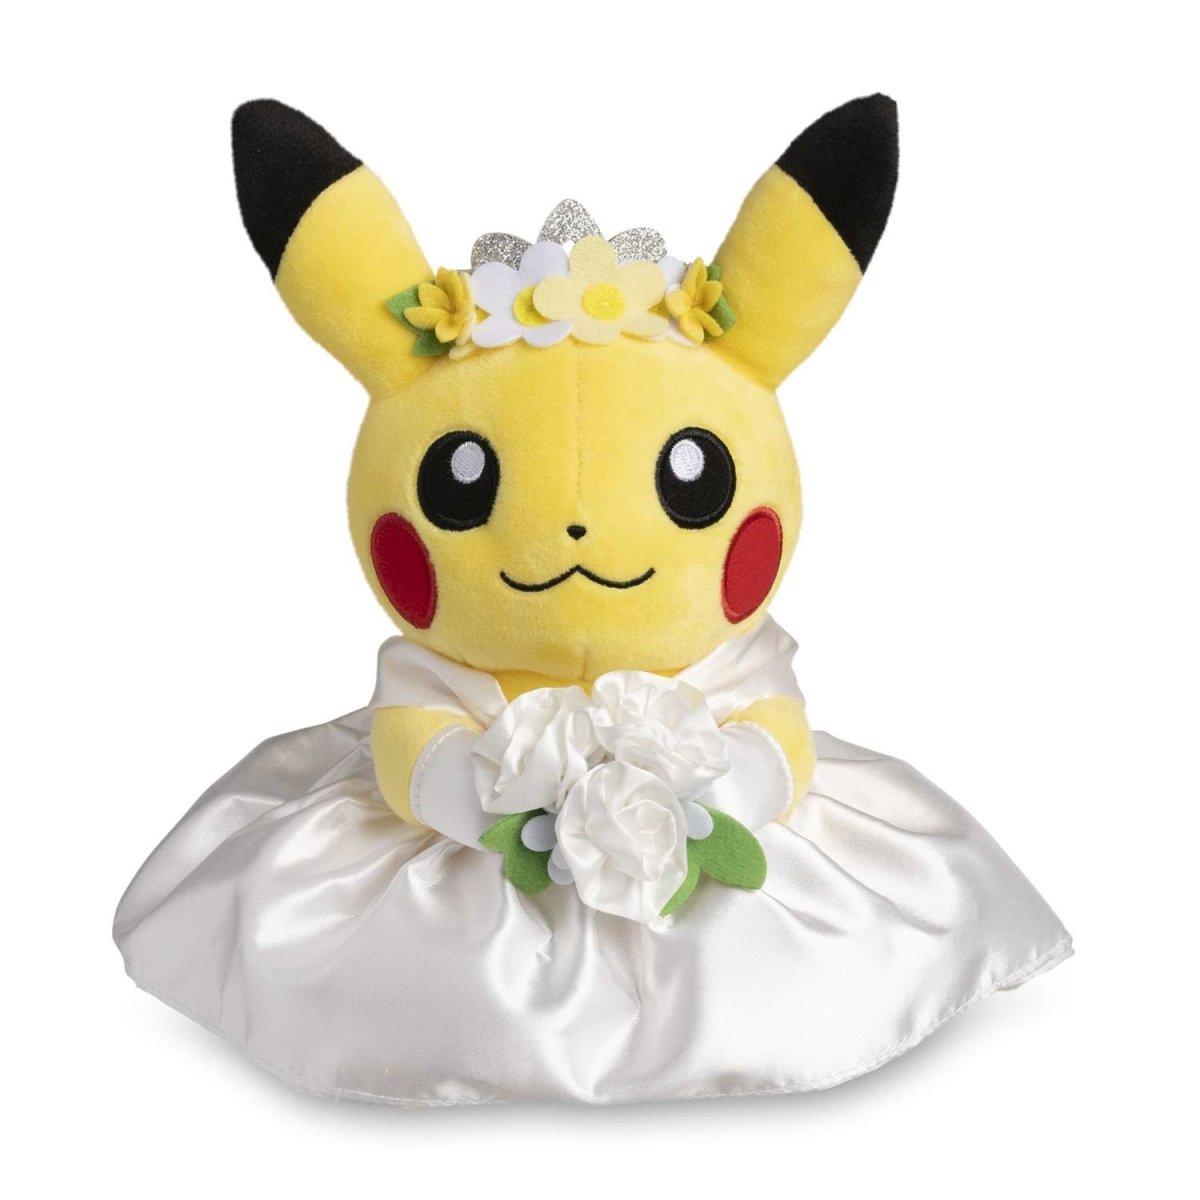 Pikachu Wedding: Wedding Dress Pikachu (Female) Plush - 8 In ...